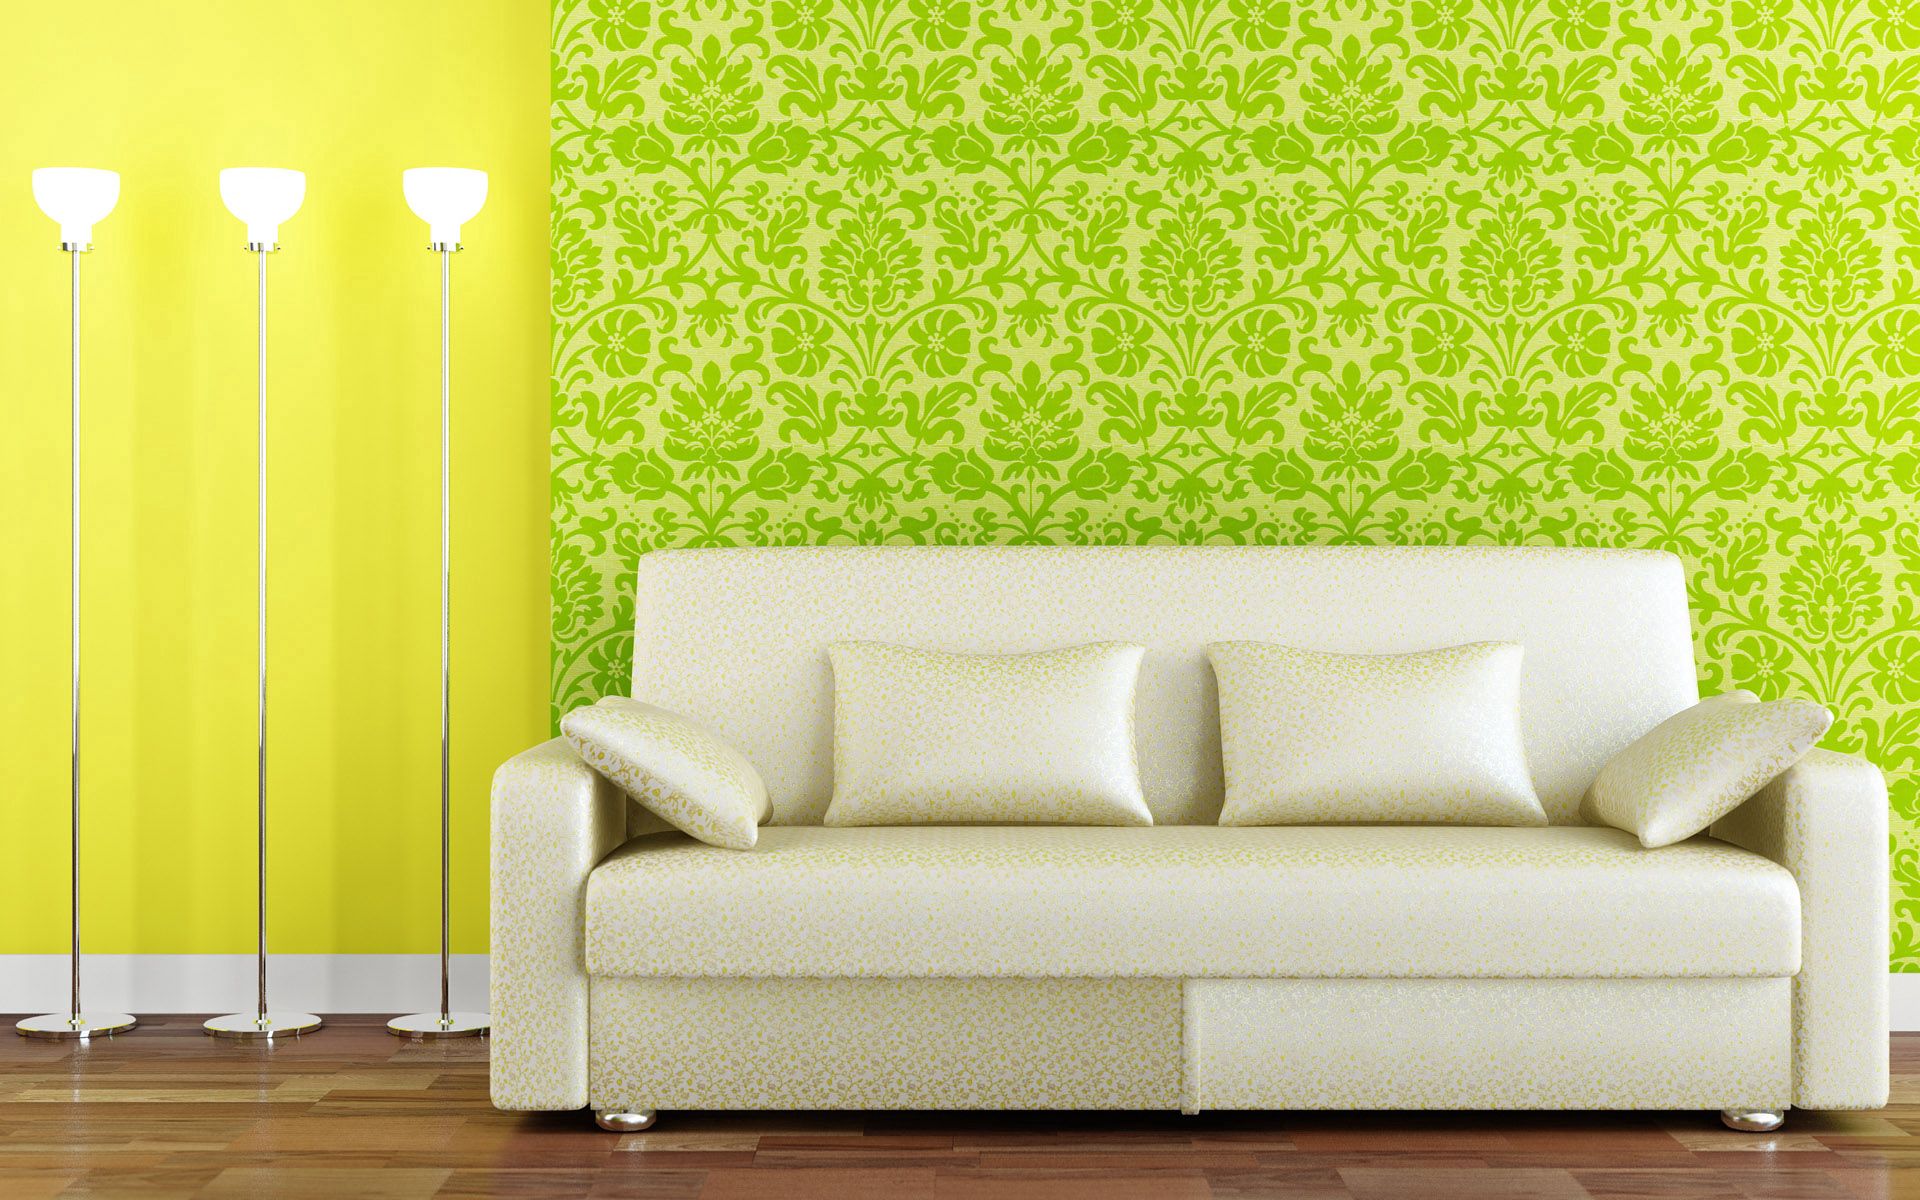 wallpaper, lamp, miscellanea, miscellaneous, wall, style, sofa, lamps